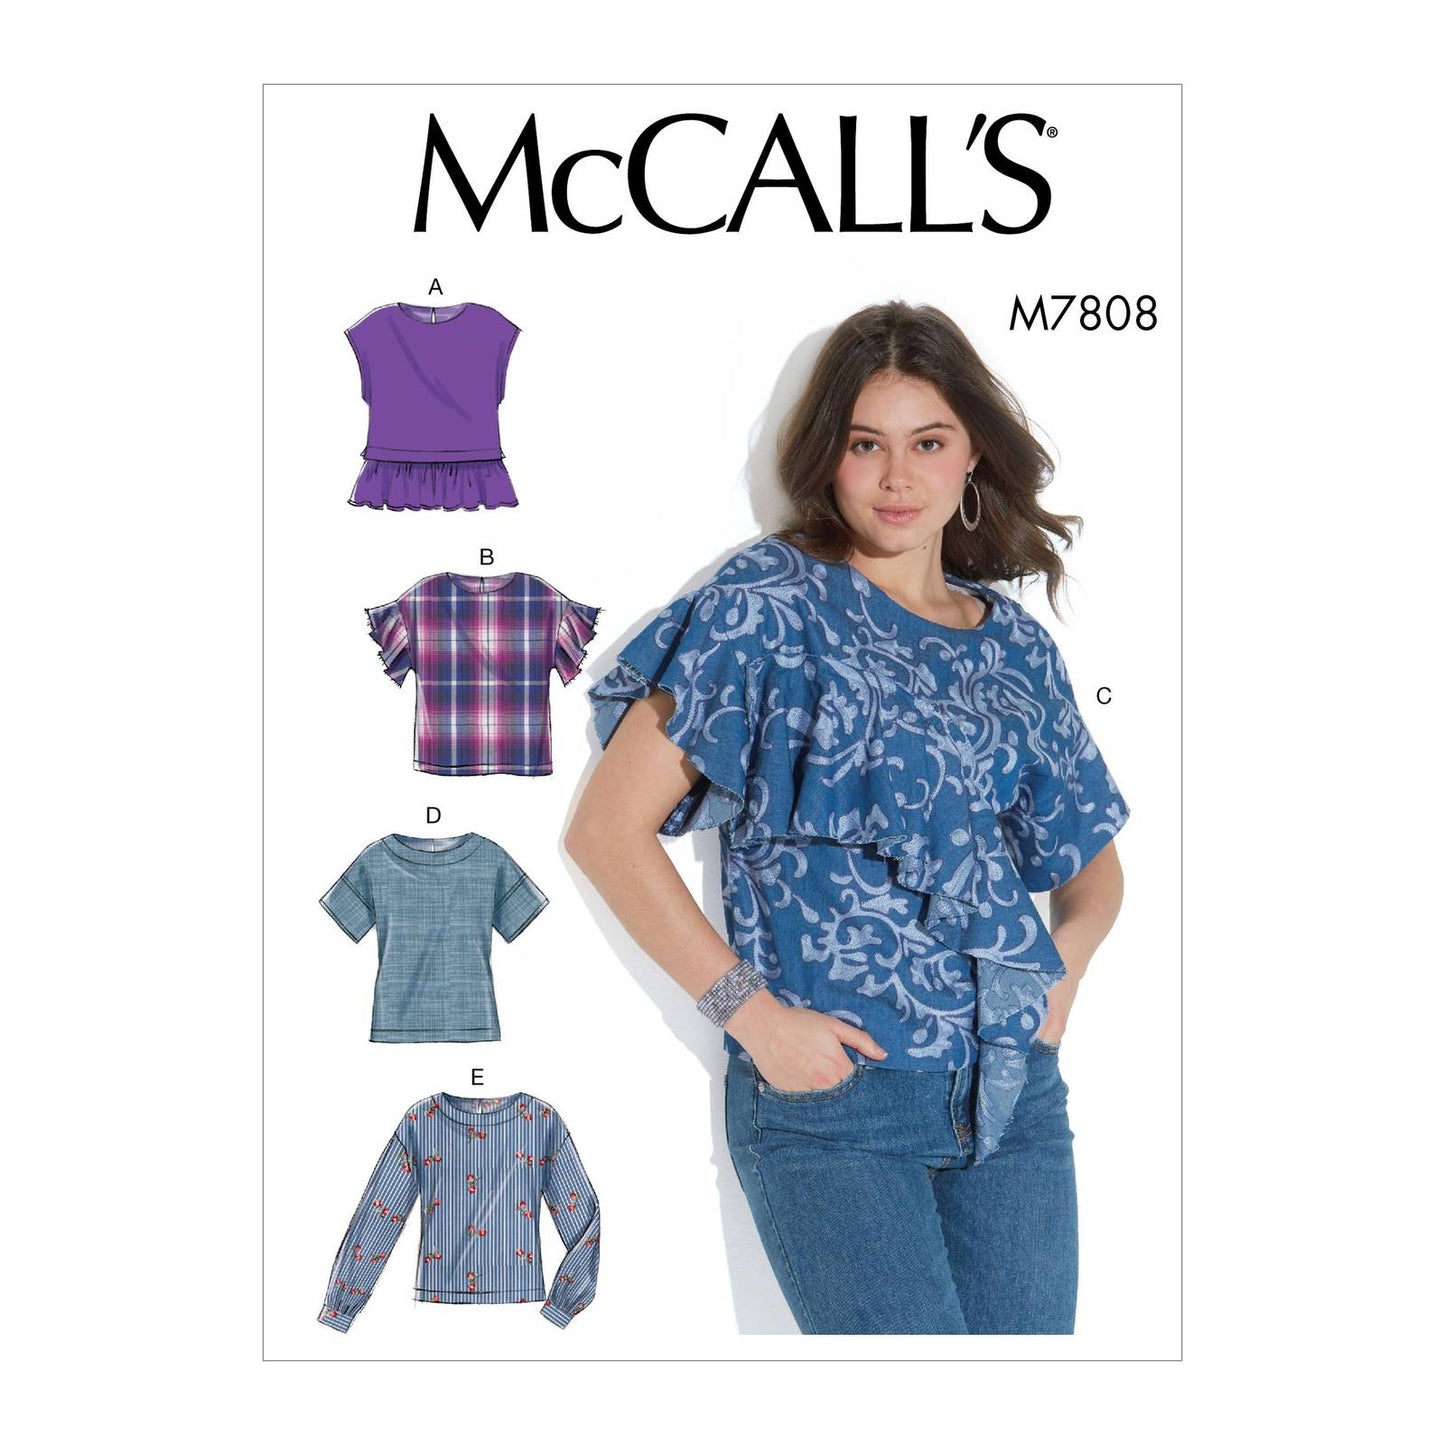 McCall's 7808